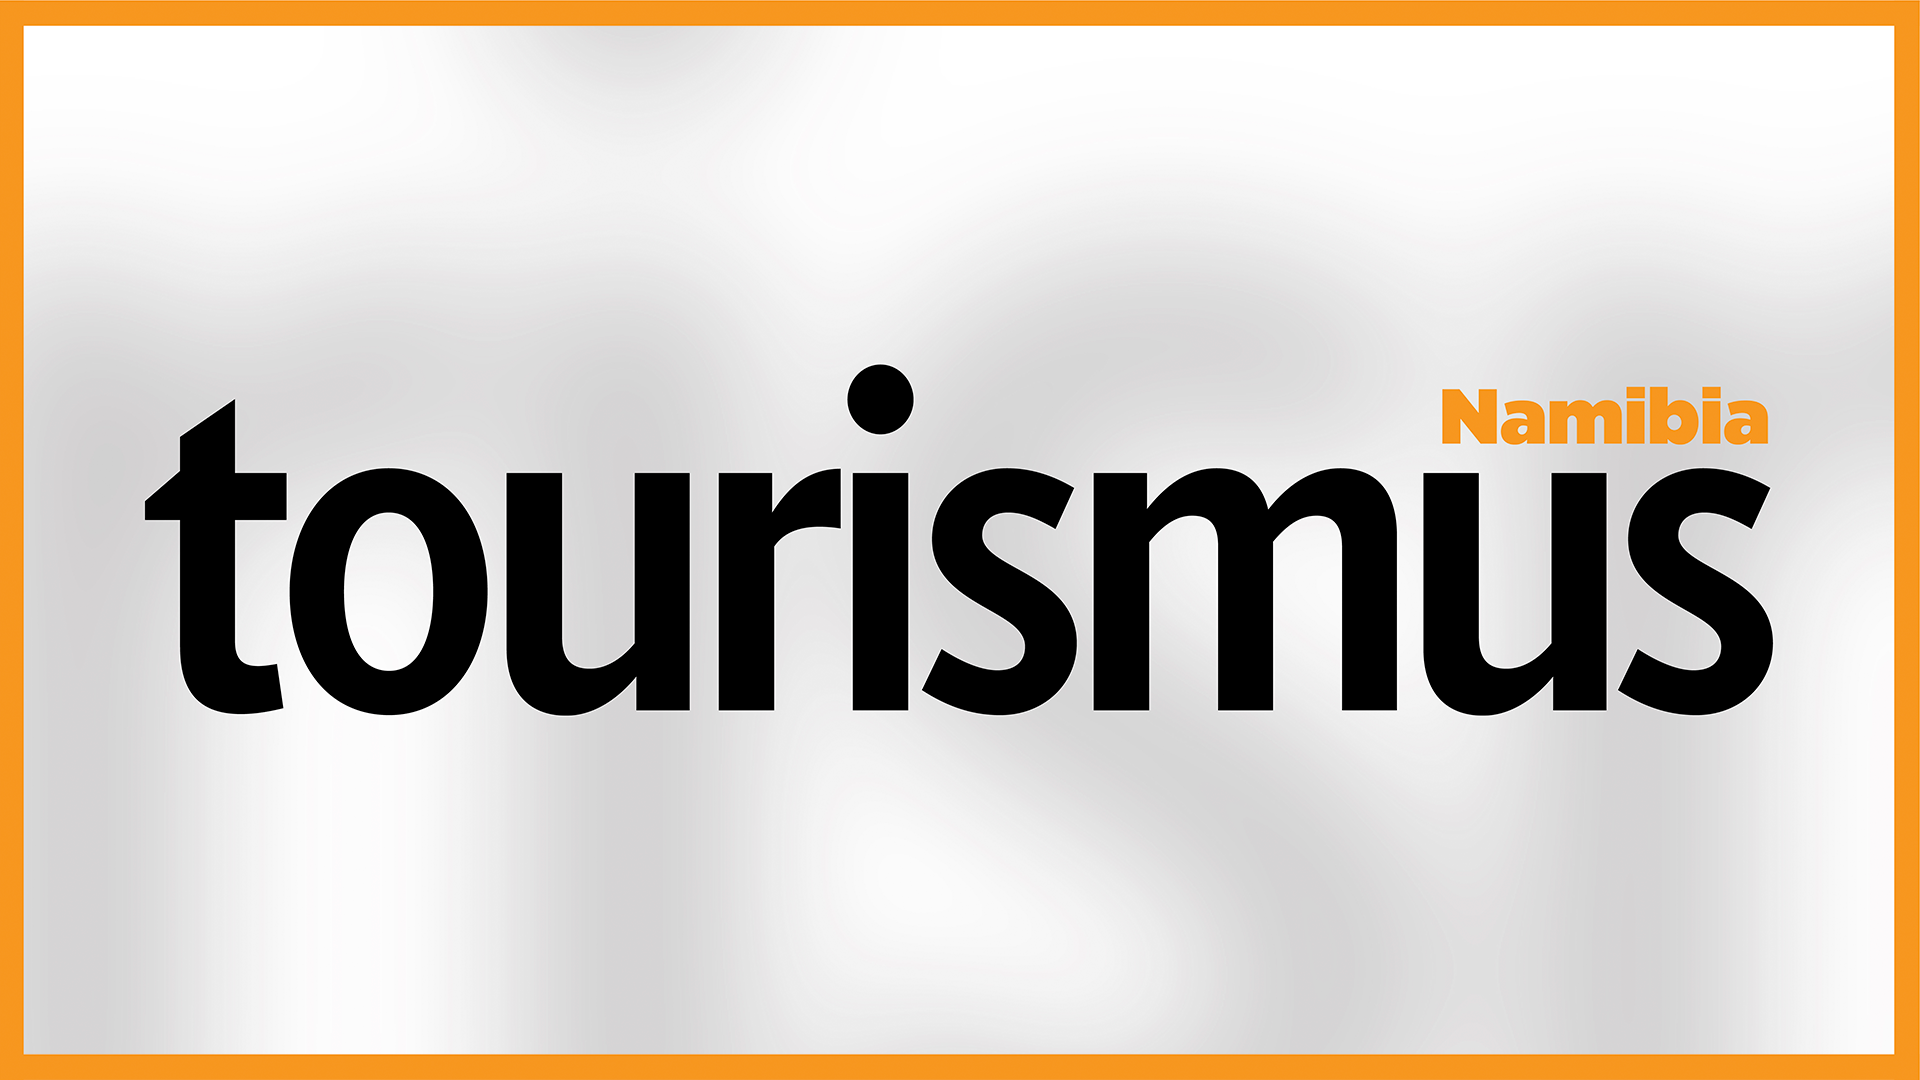 Tourismus Namibia (English) - 16 October 2021